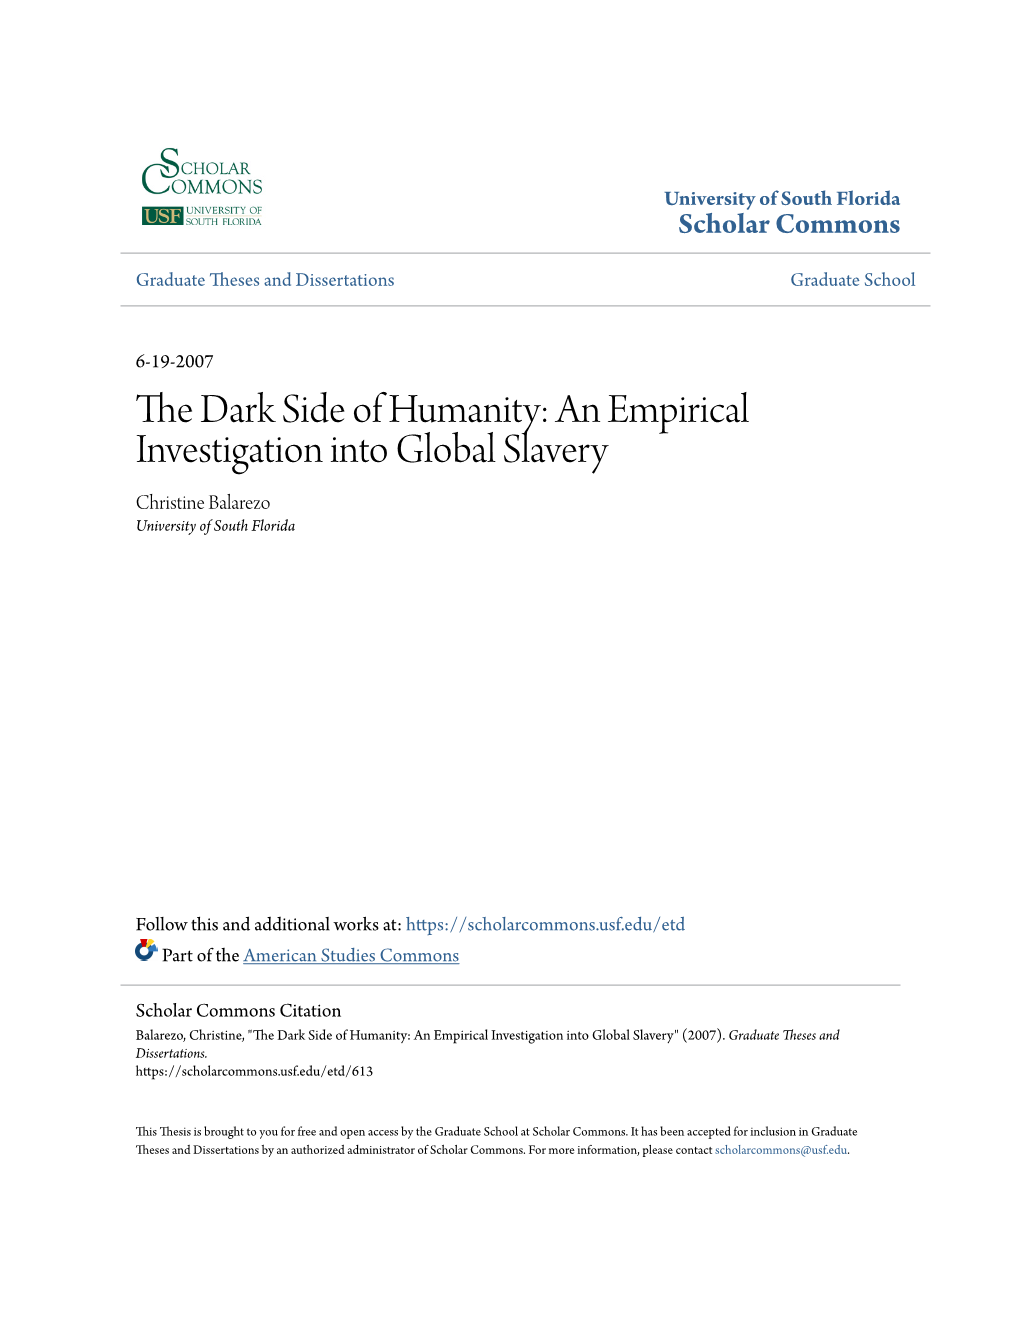 An Empirical Investigation Into Global Slavery Christine Balarezo University of South Florida